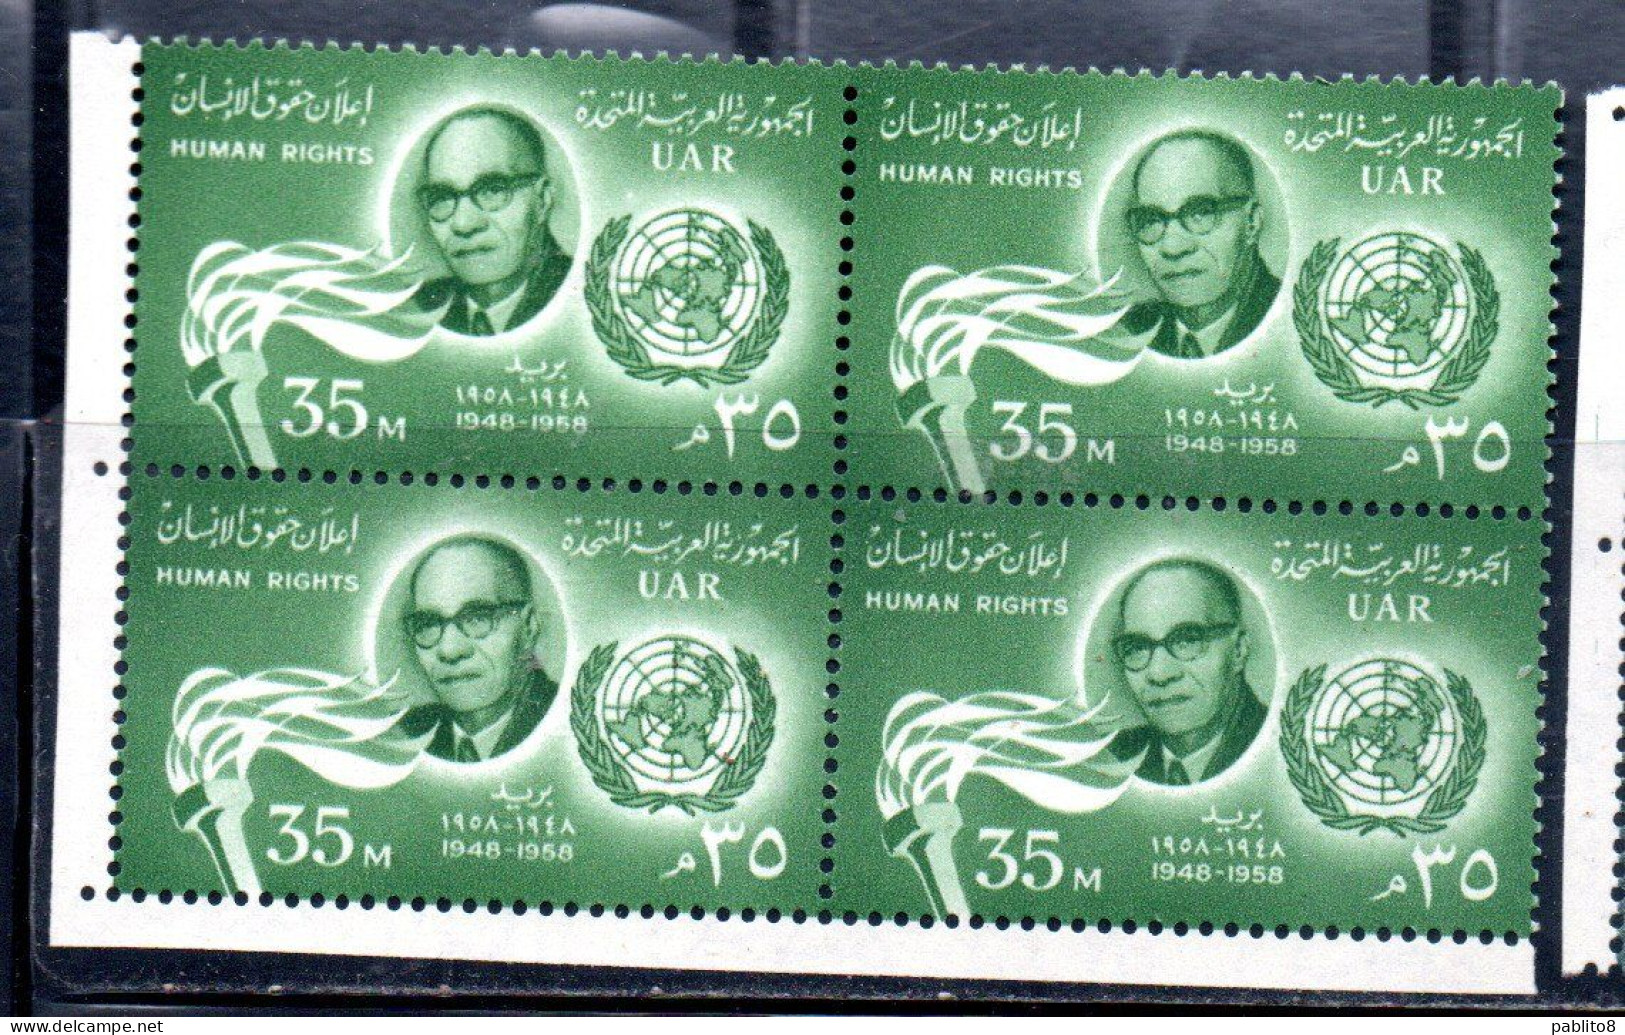 UAR EGYPT EGITTO 1958 UNIVERSAL DECLARATION OF HUMAN RIGHTS DR. MAHMOUD AZMY UN ONU EMBLEM 10m MNH - Unused Stamps